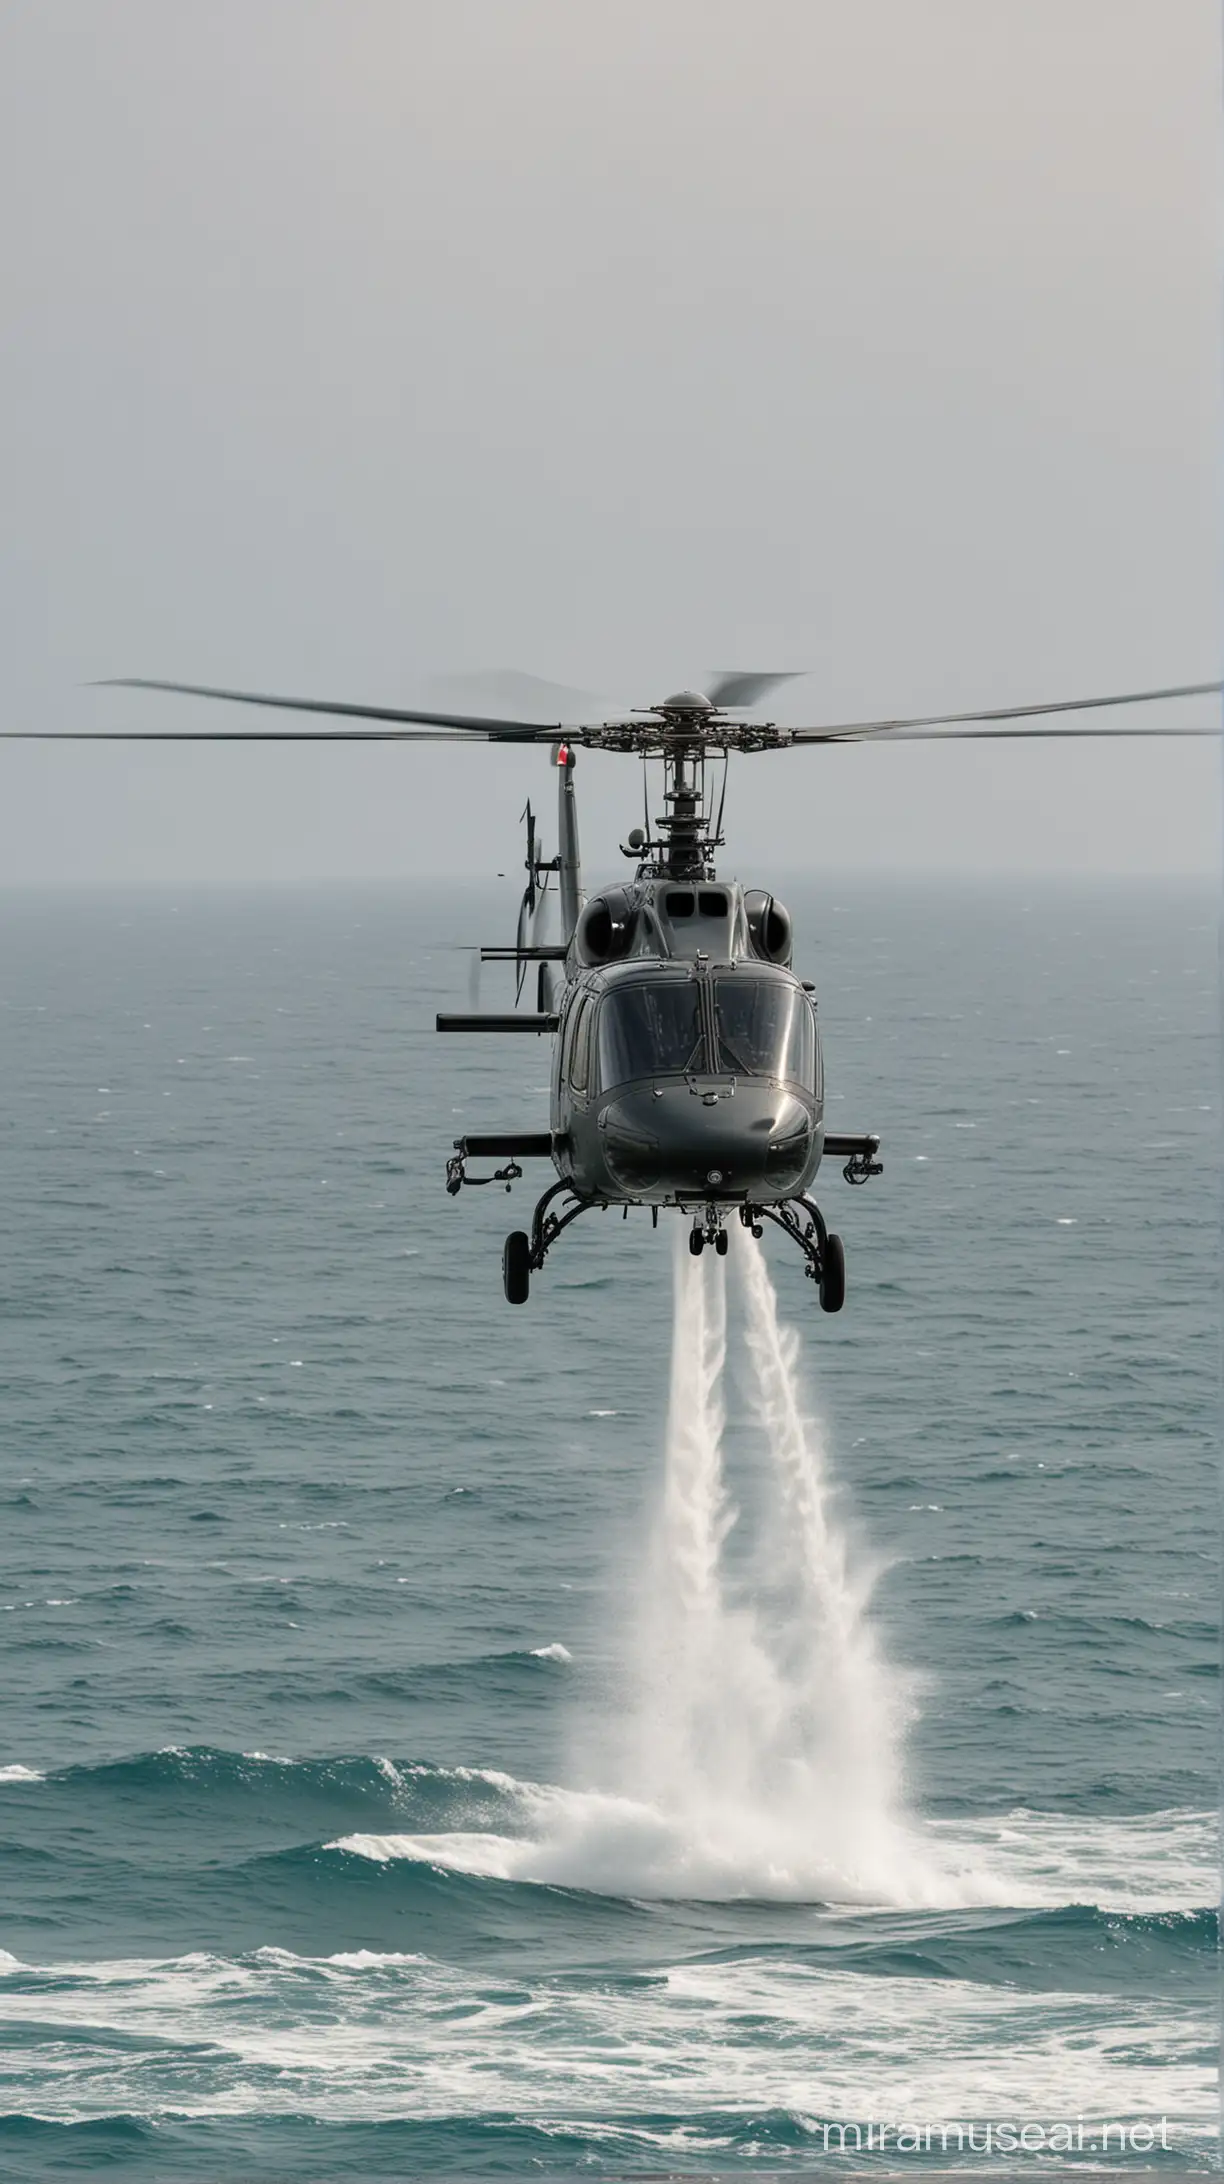 Scenic Helicopter Flight over Ocean Waves